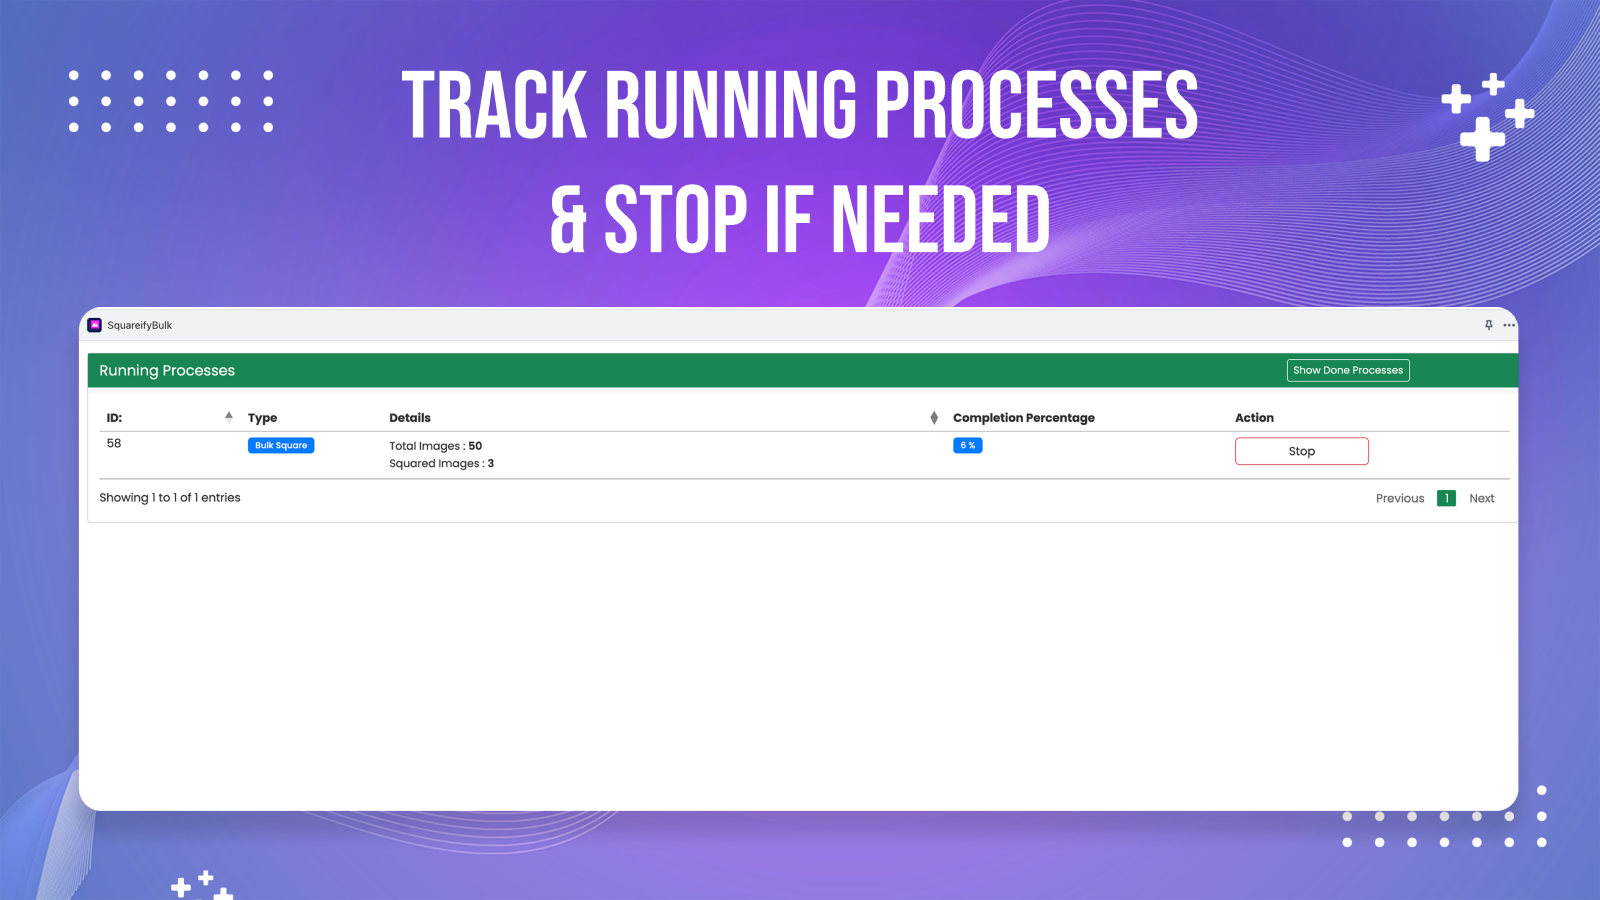 Track running processes